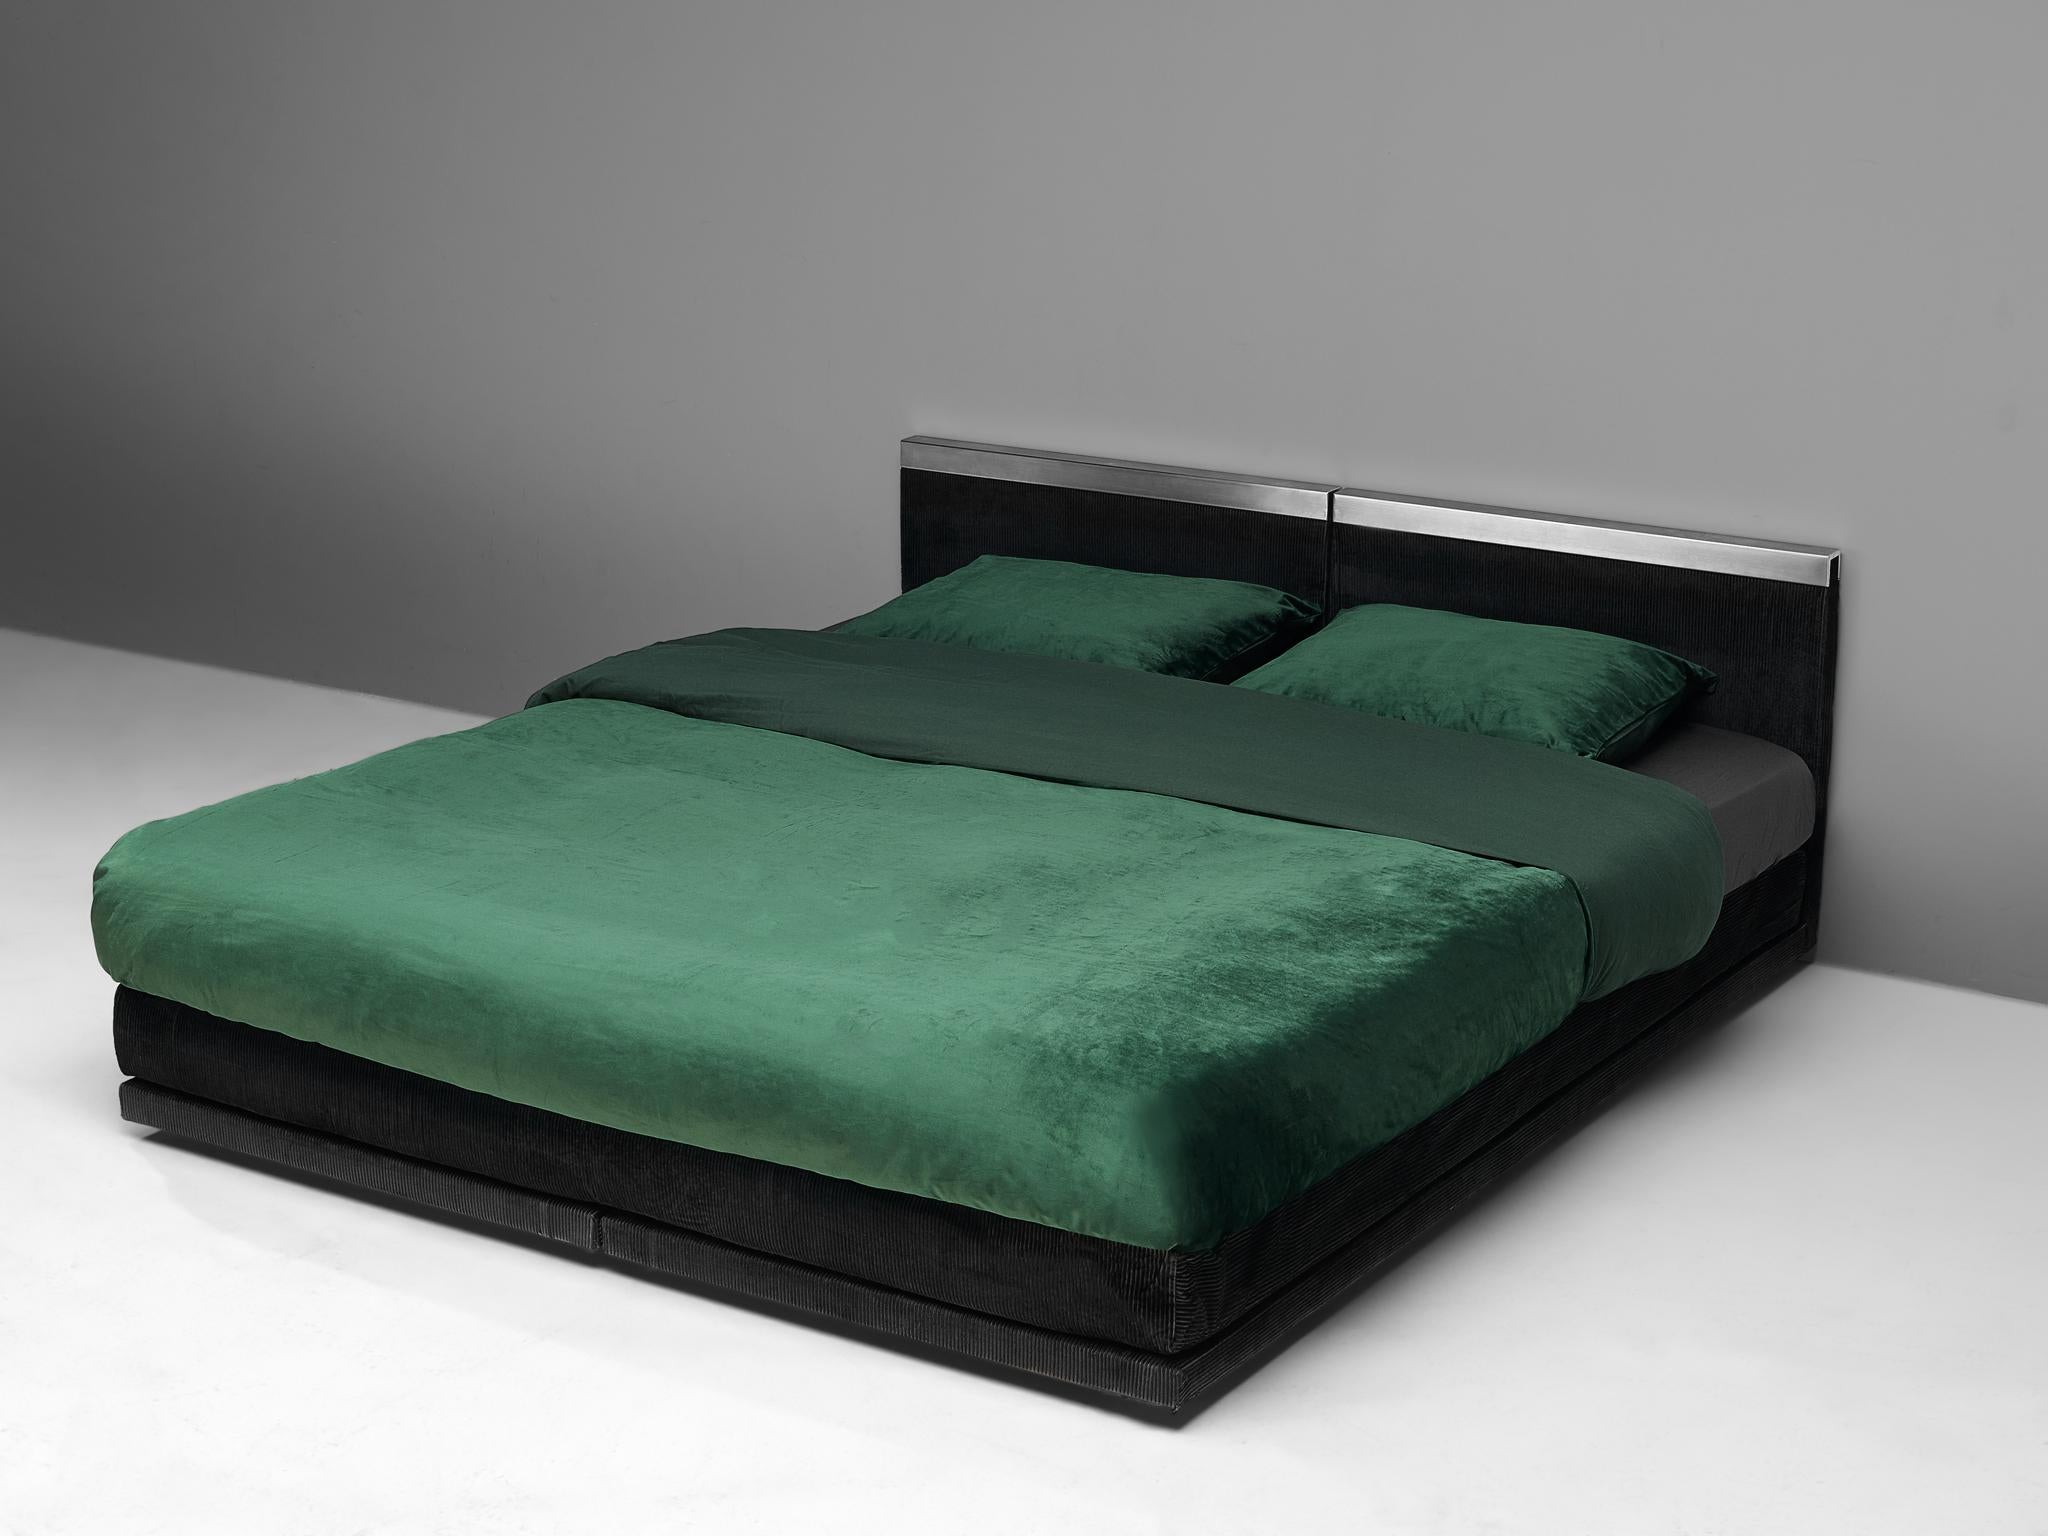 Late 20th Century Italian Custom Made Bed by Bazzani with Aluminum